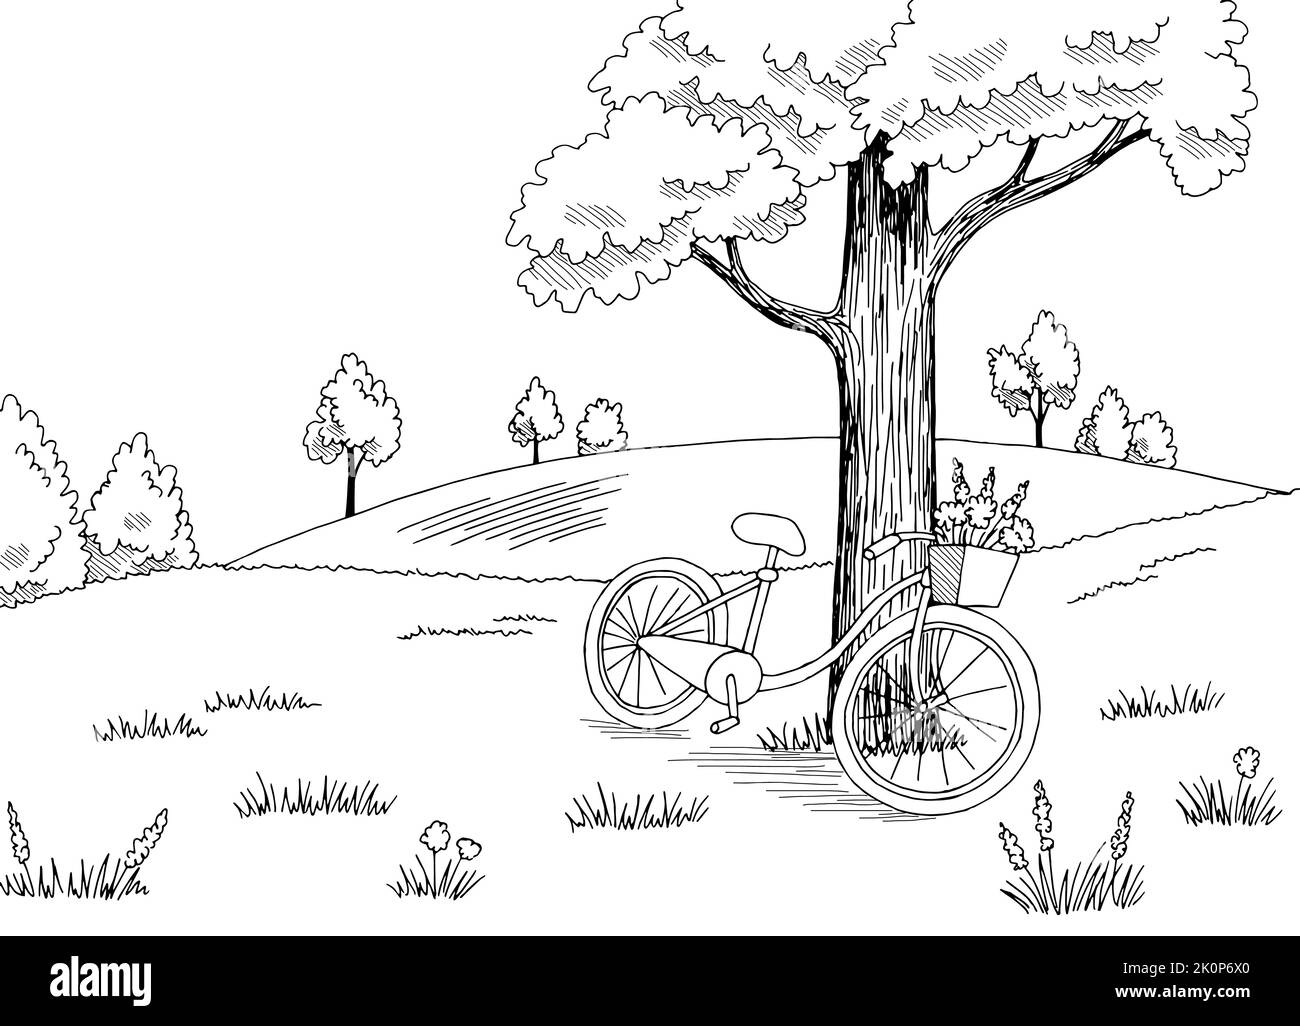 Fahrrad im Feld Grafik schwarz weiß Landschaft Skizze Illustration Vektor Stock Vektor